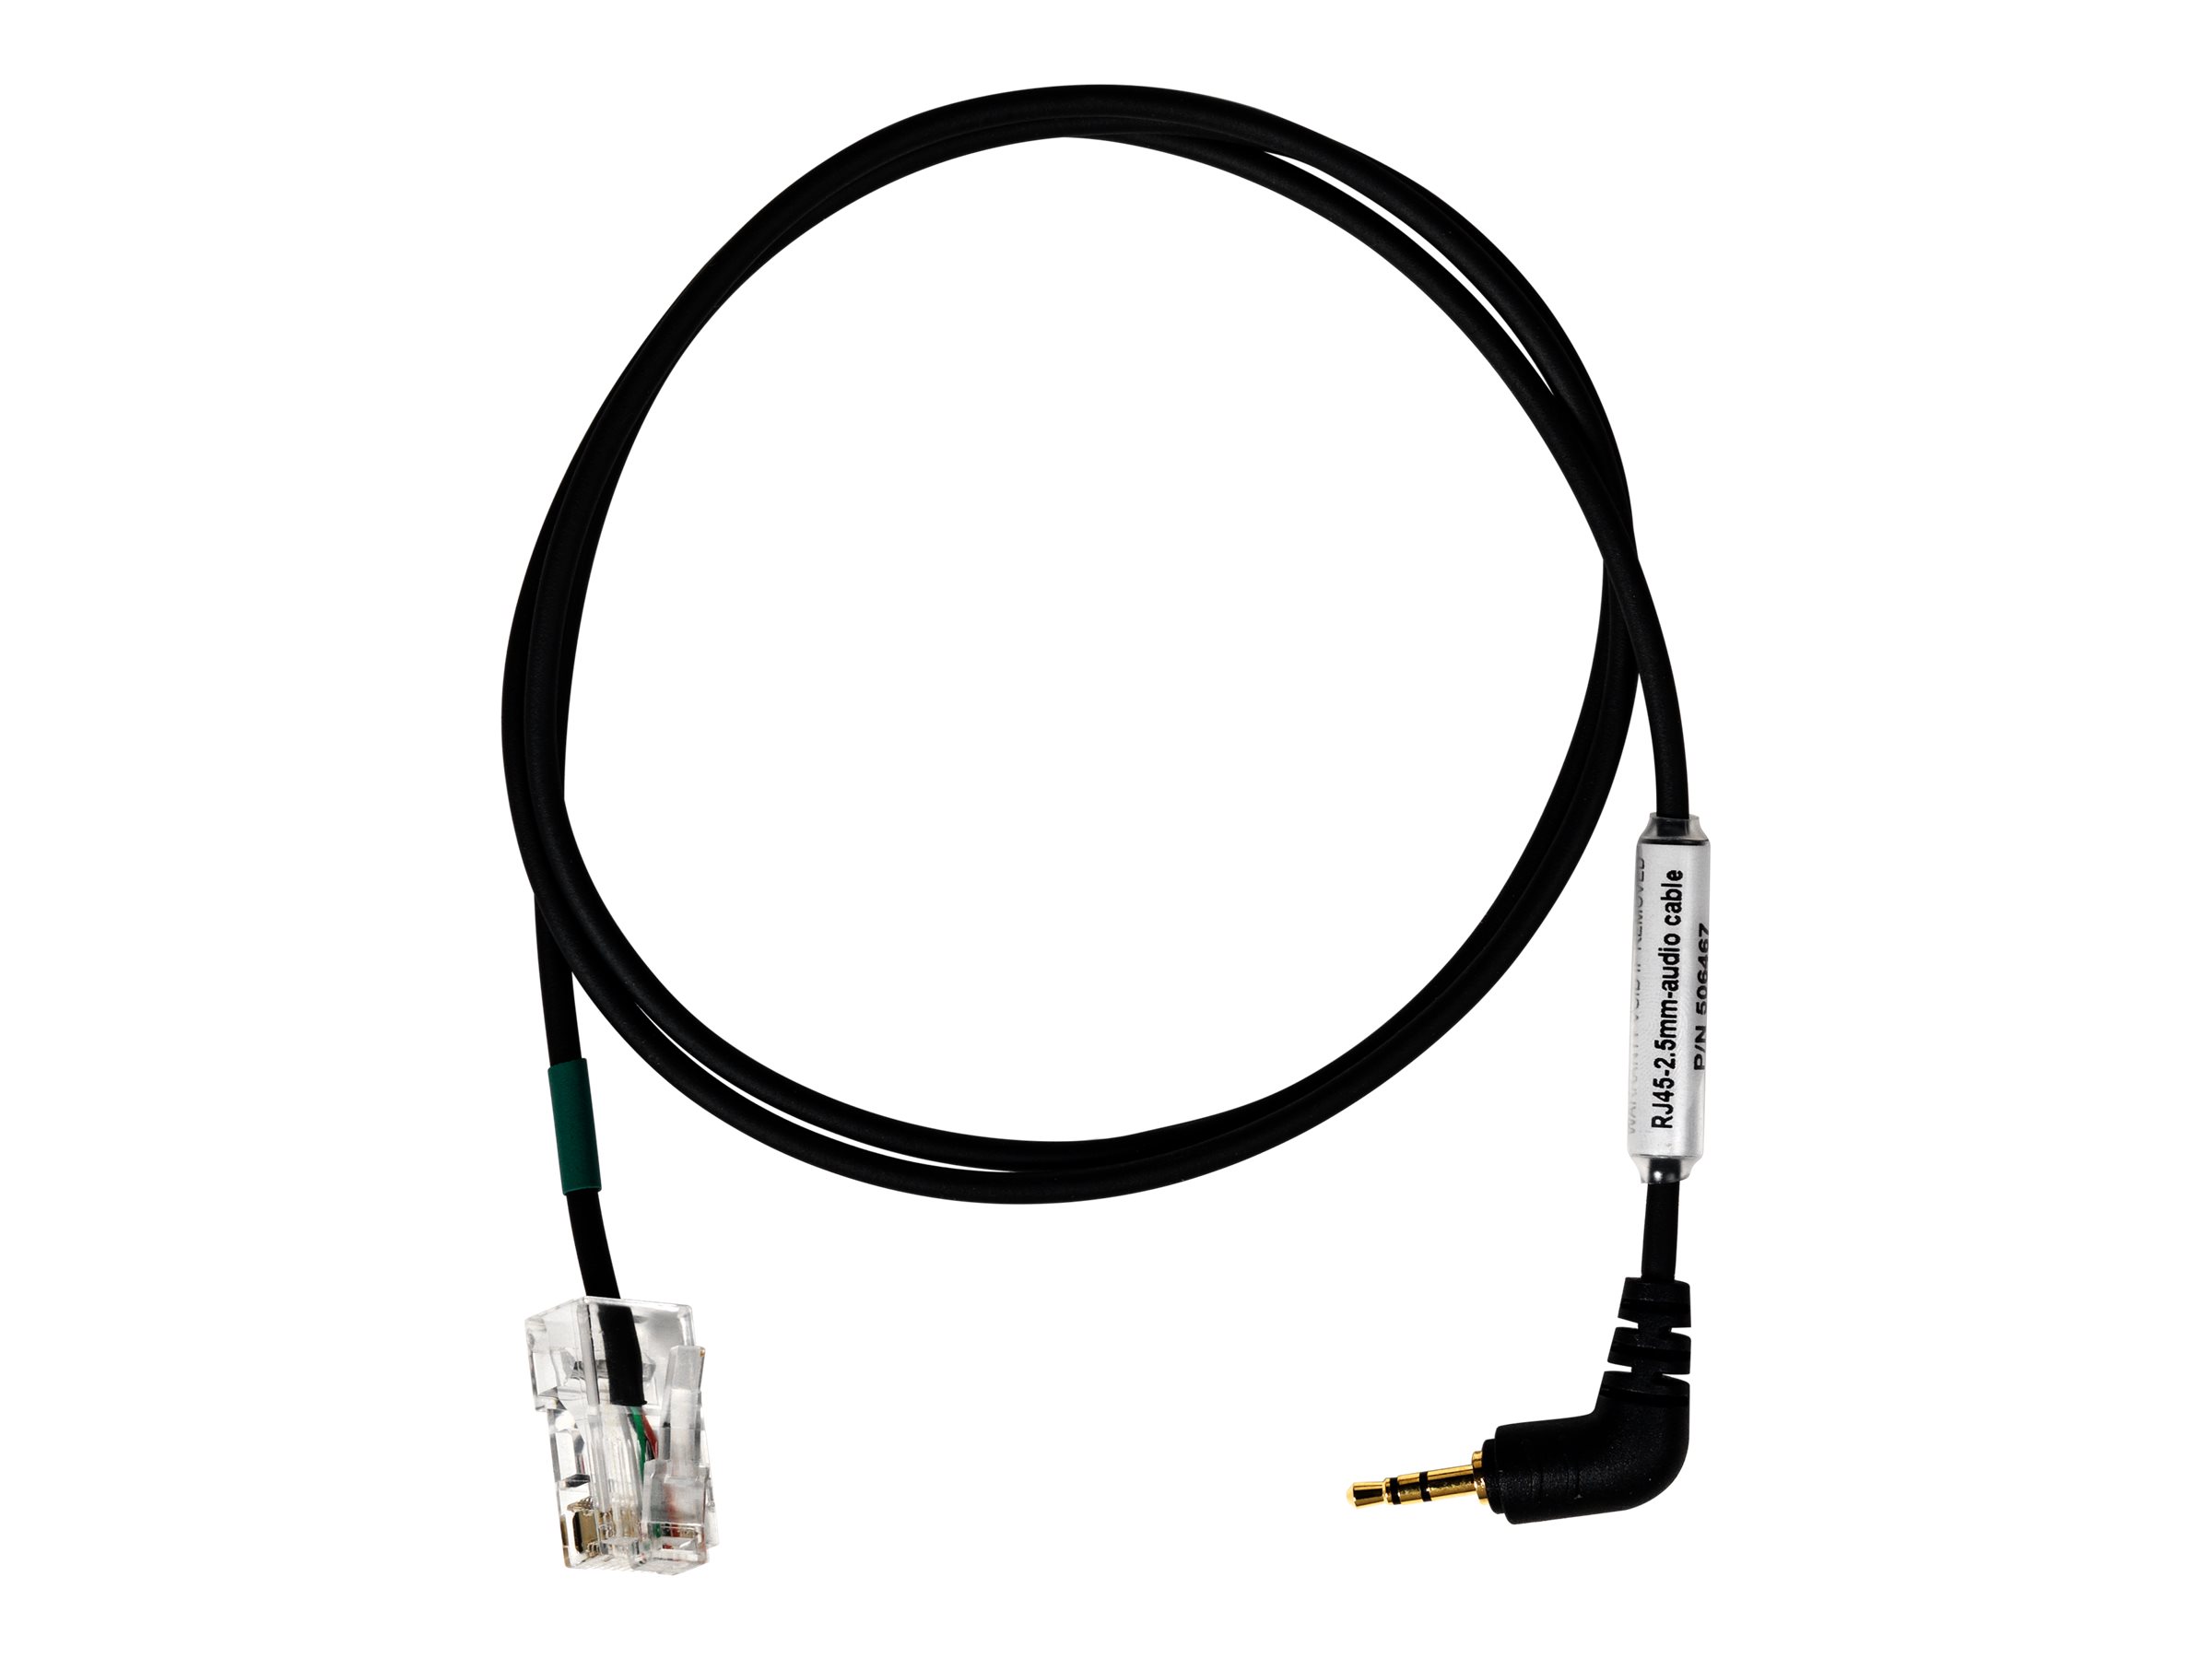 EPOS | SENNHEISER - Câble pour casque micro - jack micro mâle pour RJ-45 mâle - pour IMPACT D 10; IMPACT SDW 50XX; EPOS I SENNHEISER D 10 - 1000713 - Câbles pour écouteurs